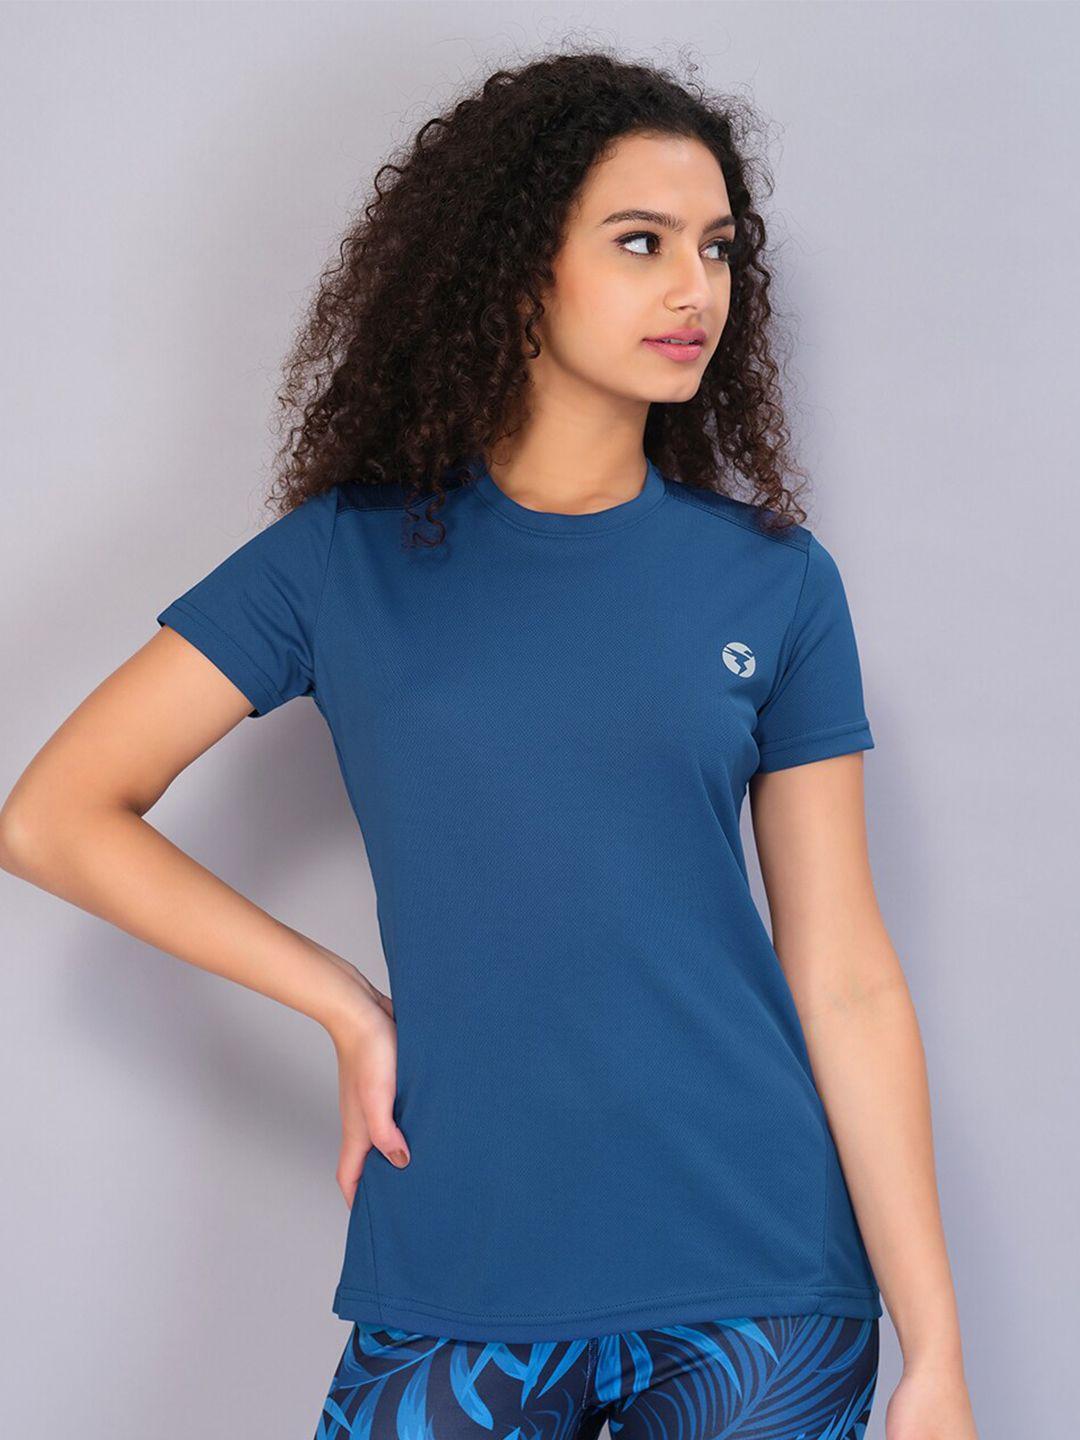 technosport-women-teal-antimicrobial-applique-t-shirt